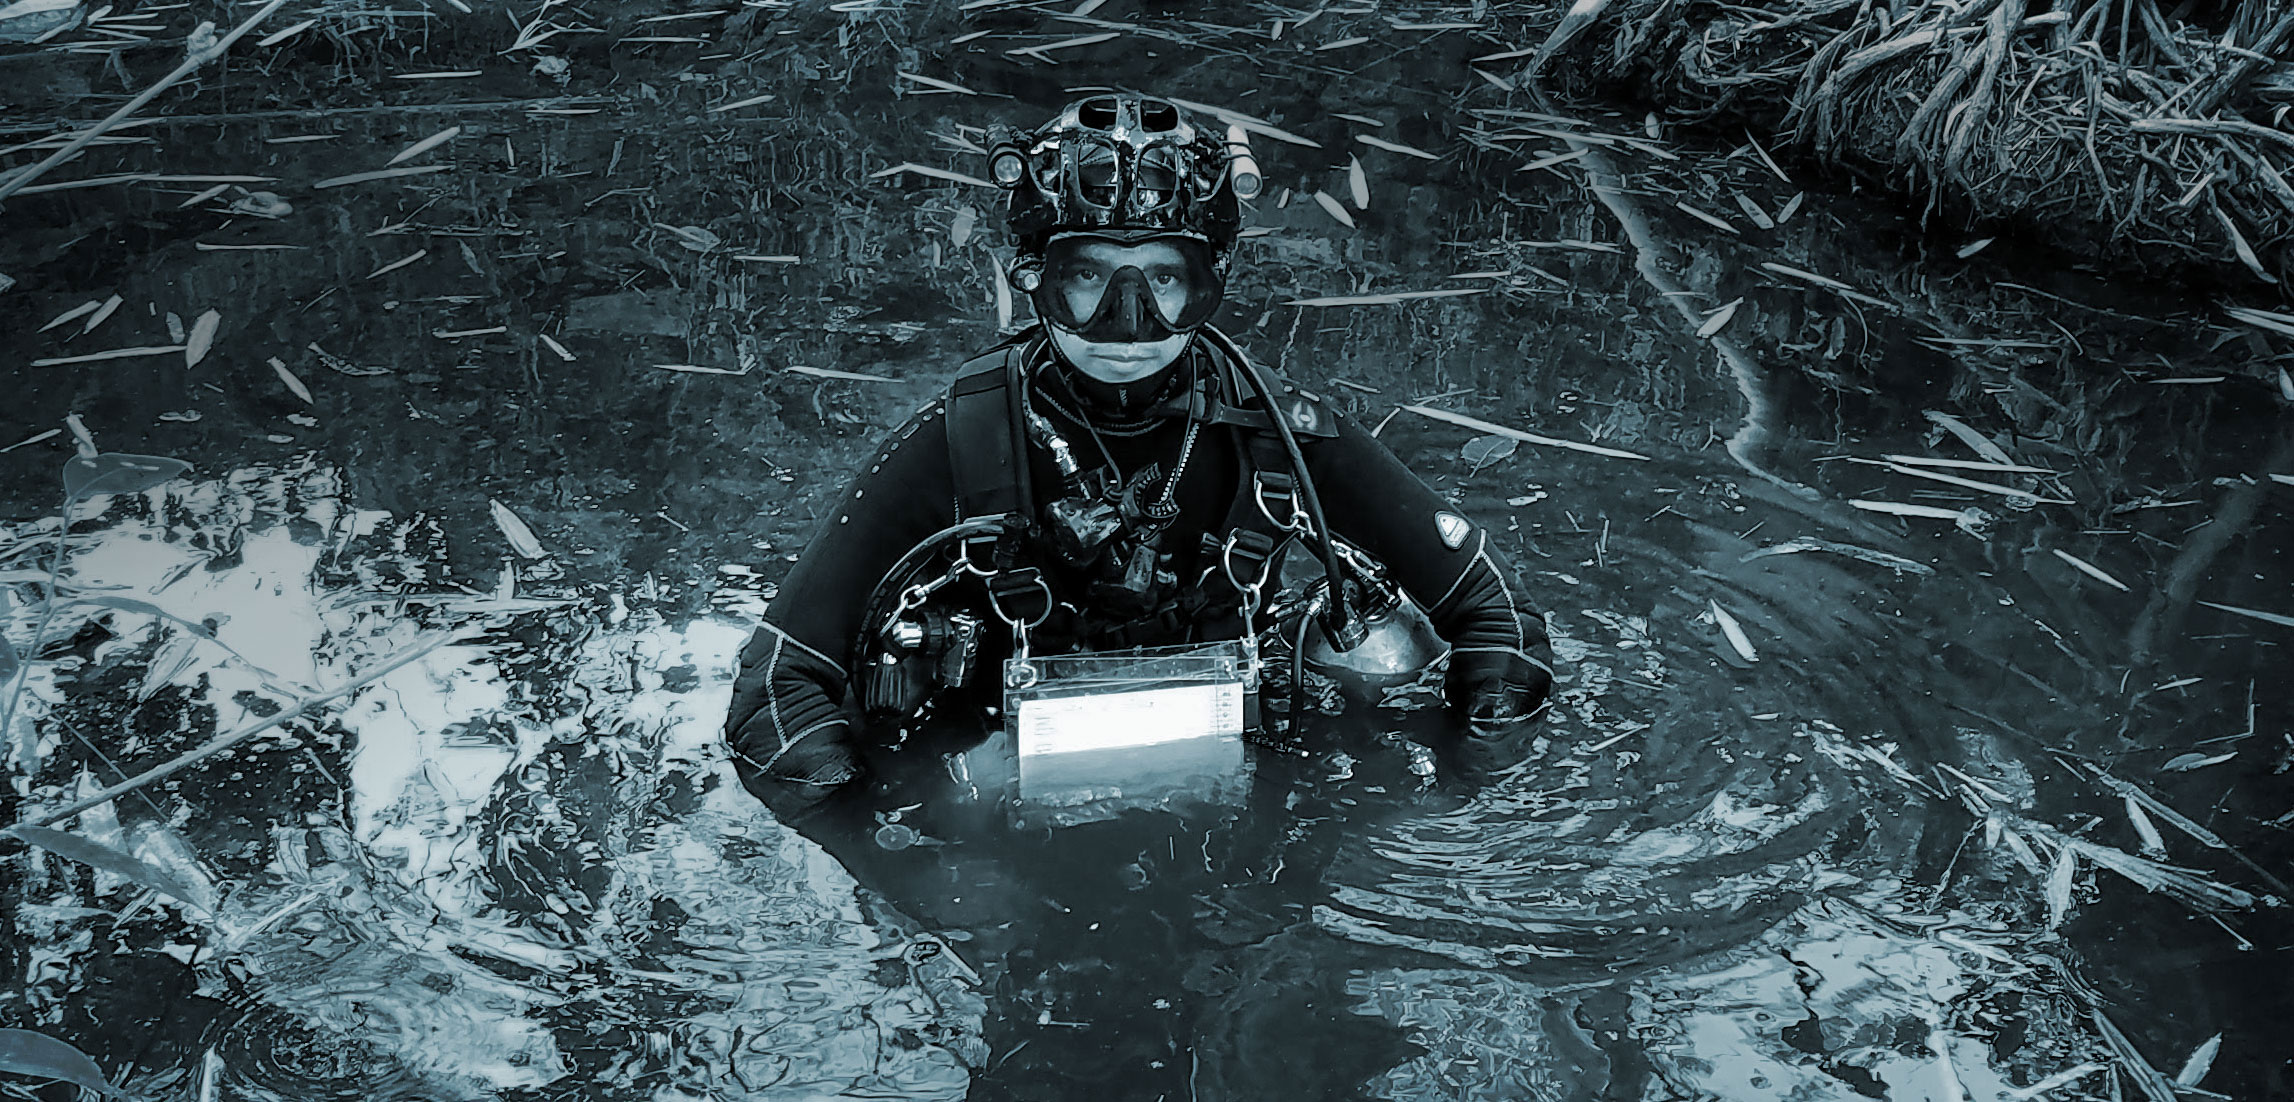 Fernando Calderon-Gutierrez cave diving